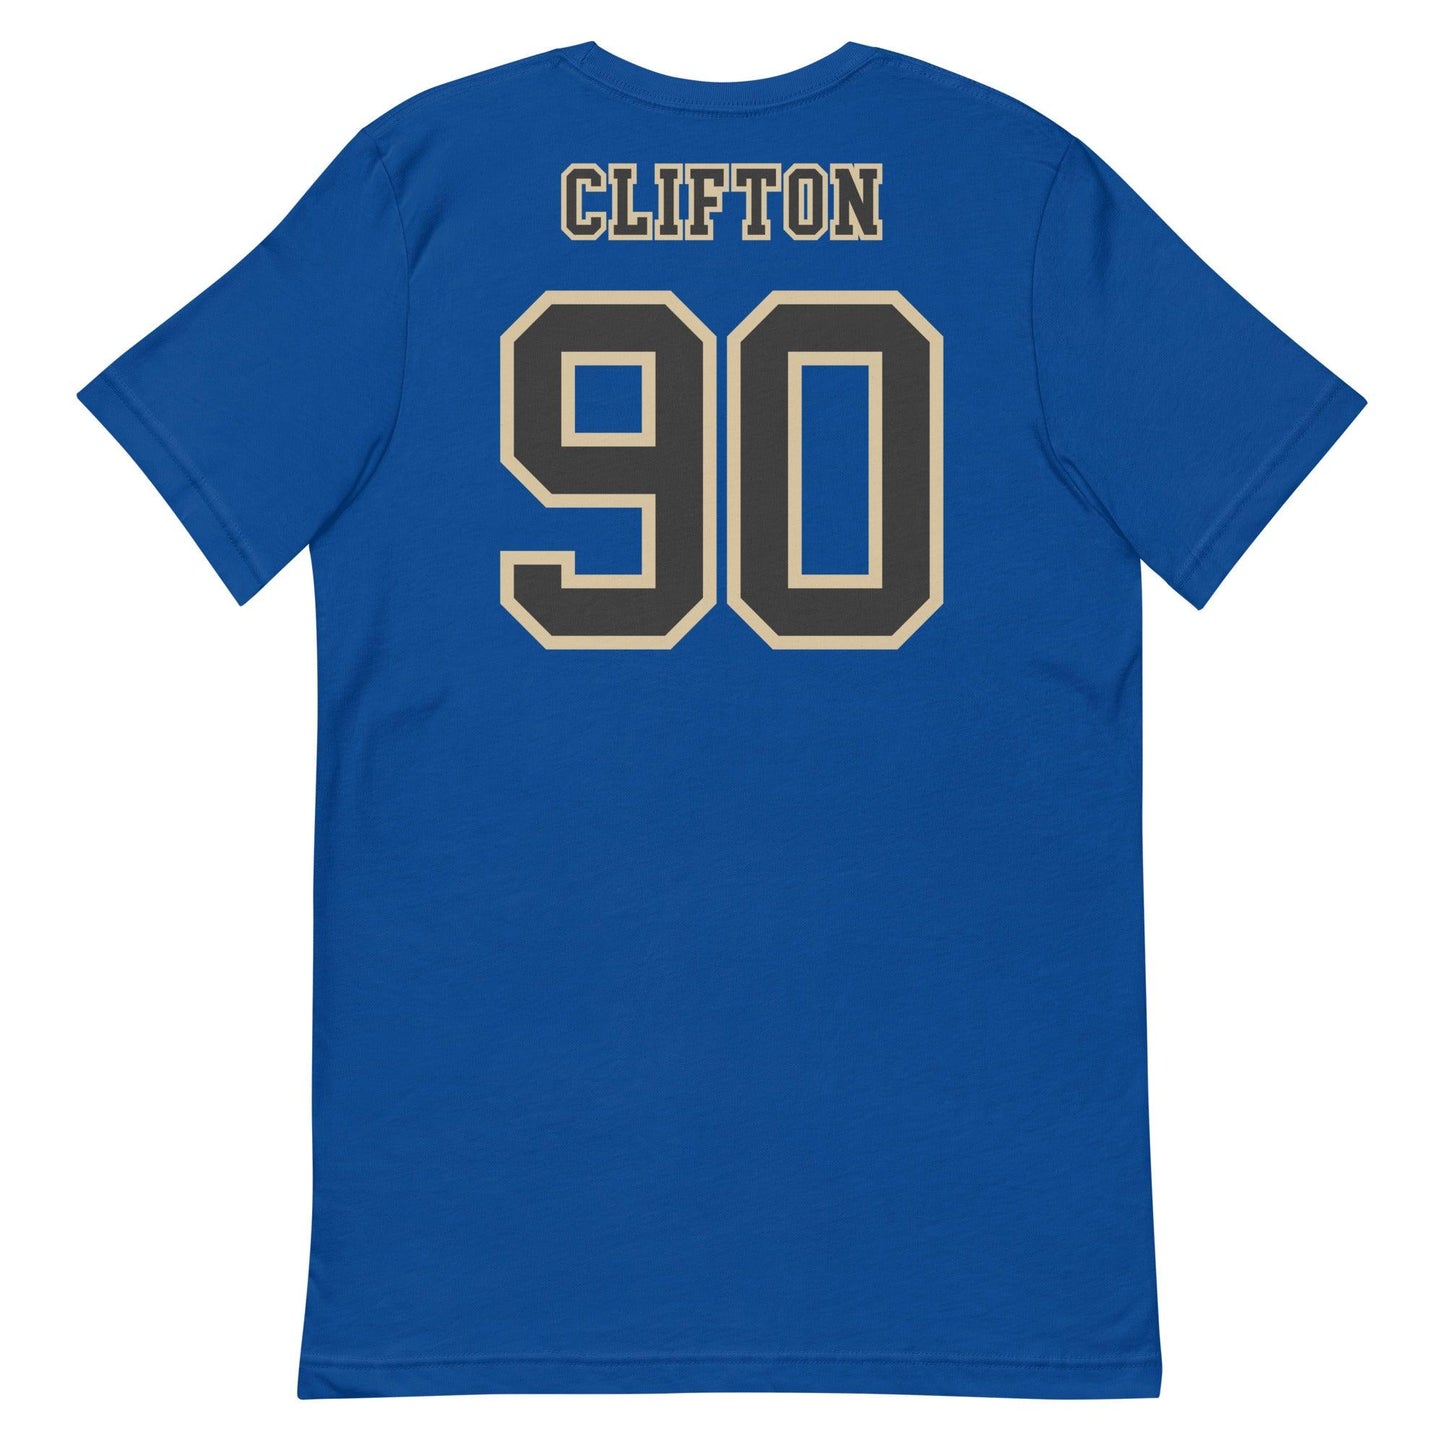 Nate Clifton "Jersey" t-shirt - Fan Arch